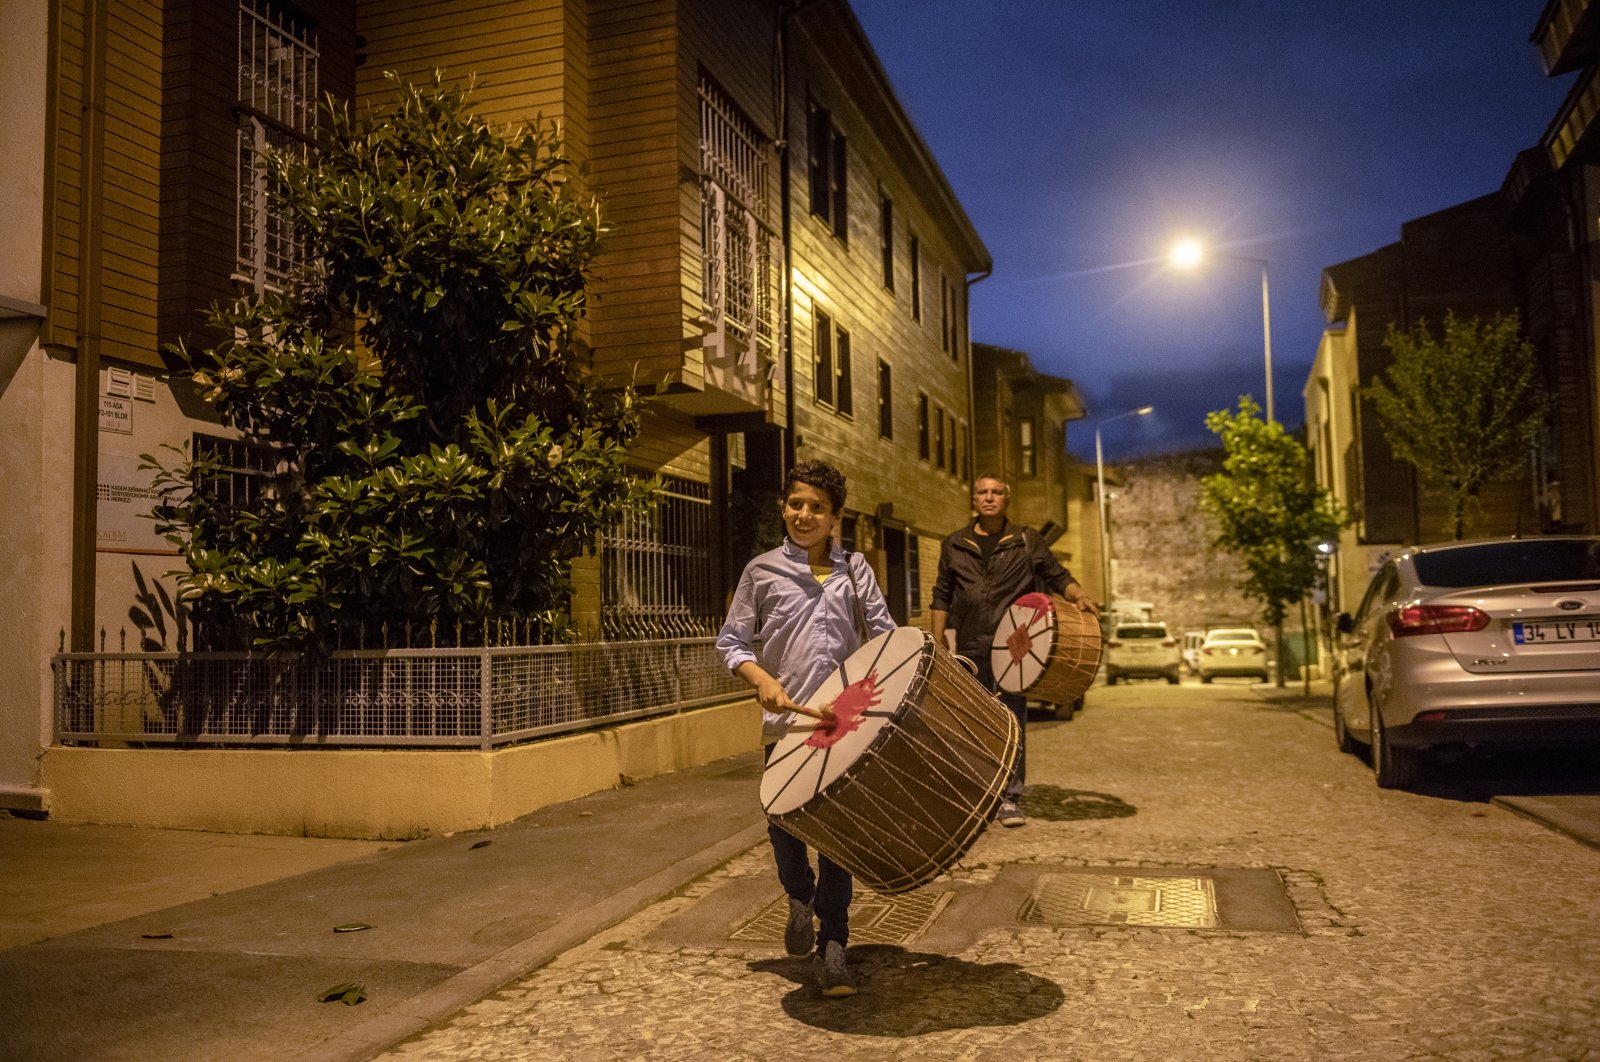 Ramadan drummers walking late at night in the streets of Istanbul, Türkiye, May 30, 2018. (Shutterstock Photo)